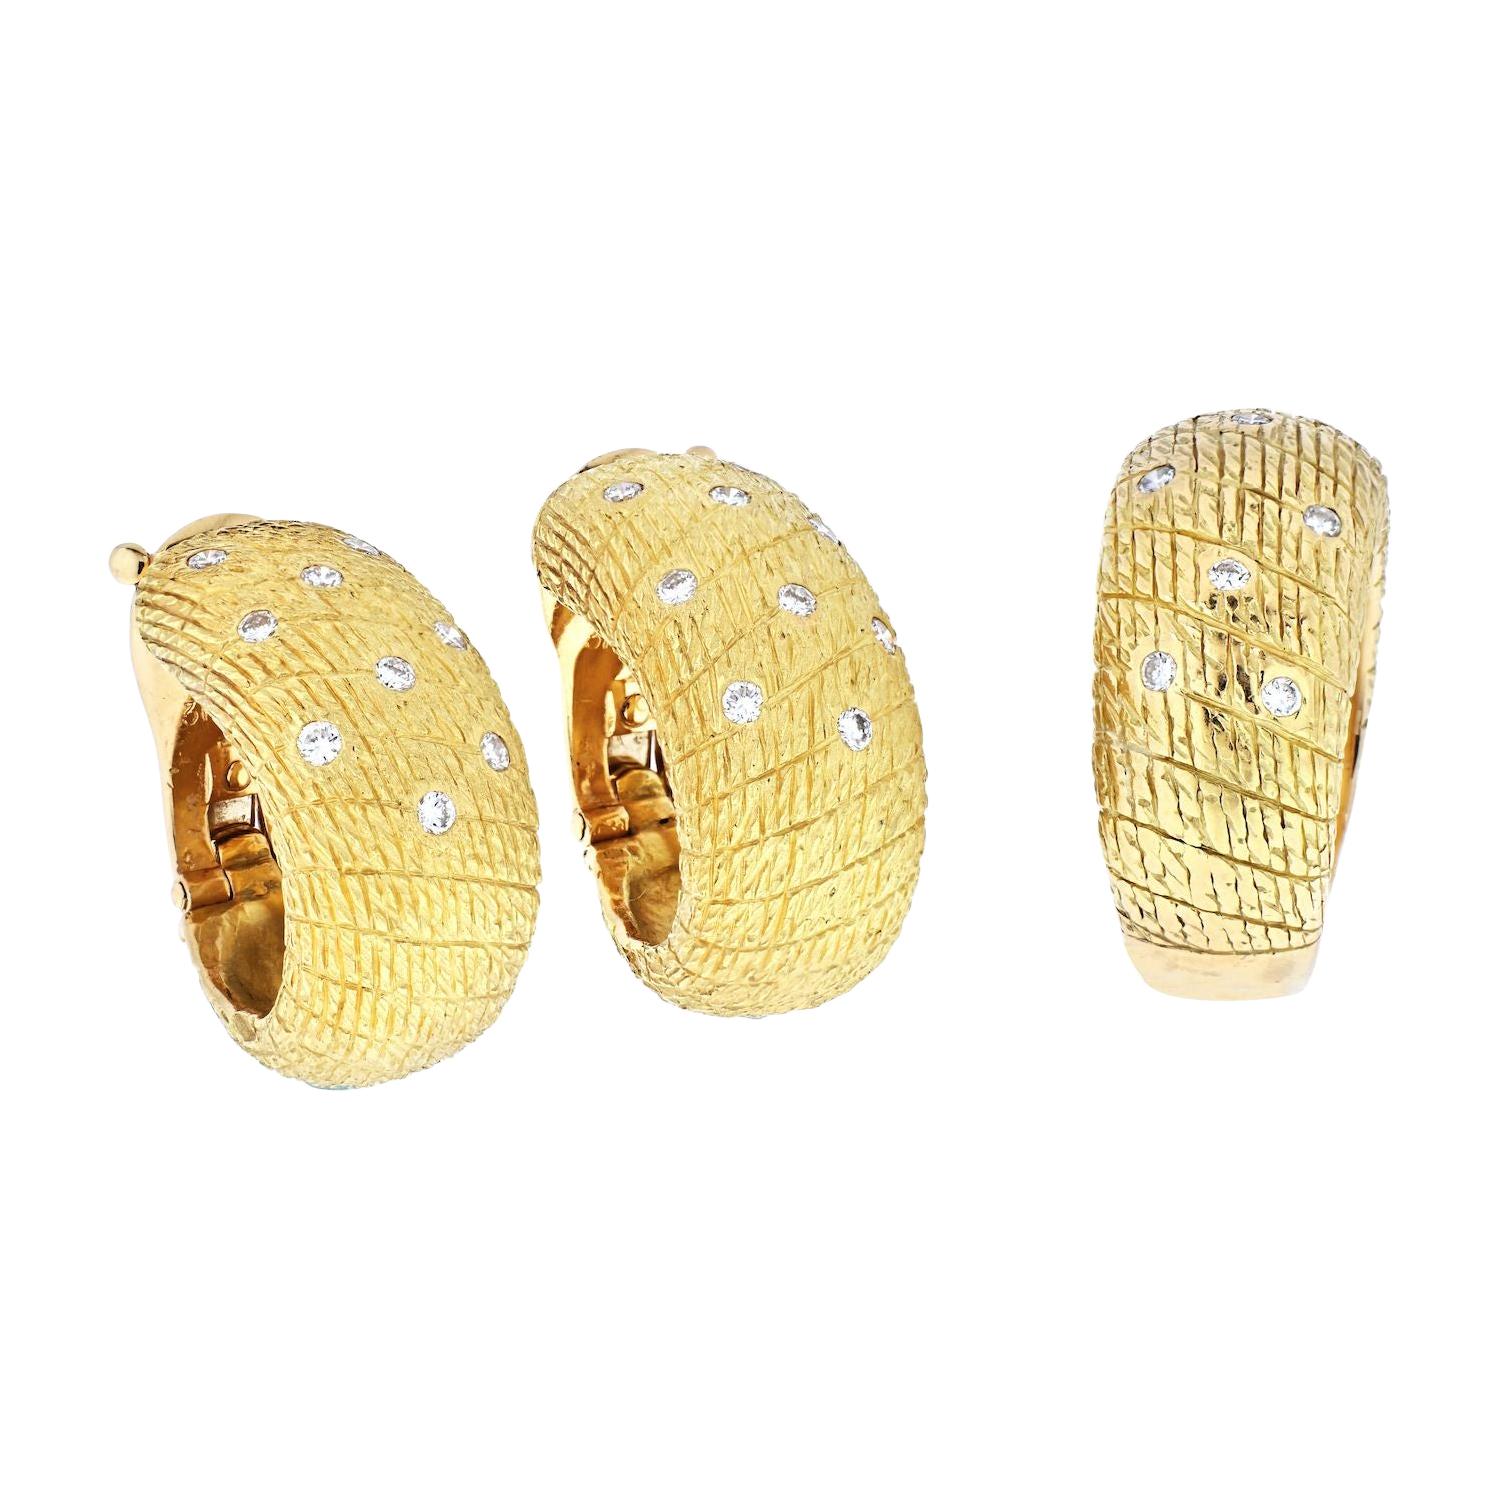 Van Cleef & Arpels, boucles d'oreilles et bague en or jaune 18 carats serties de diamants, annes 1970